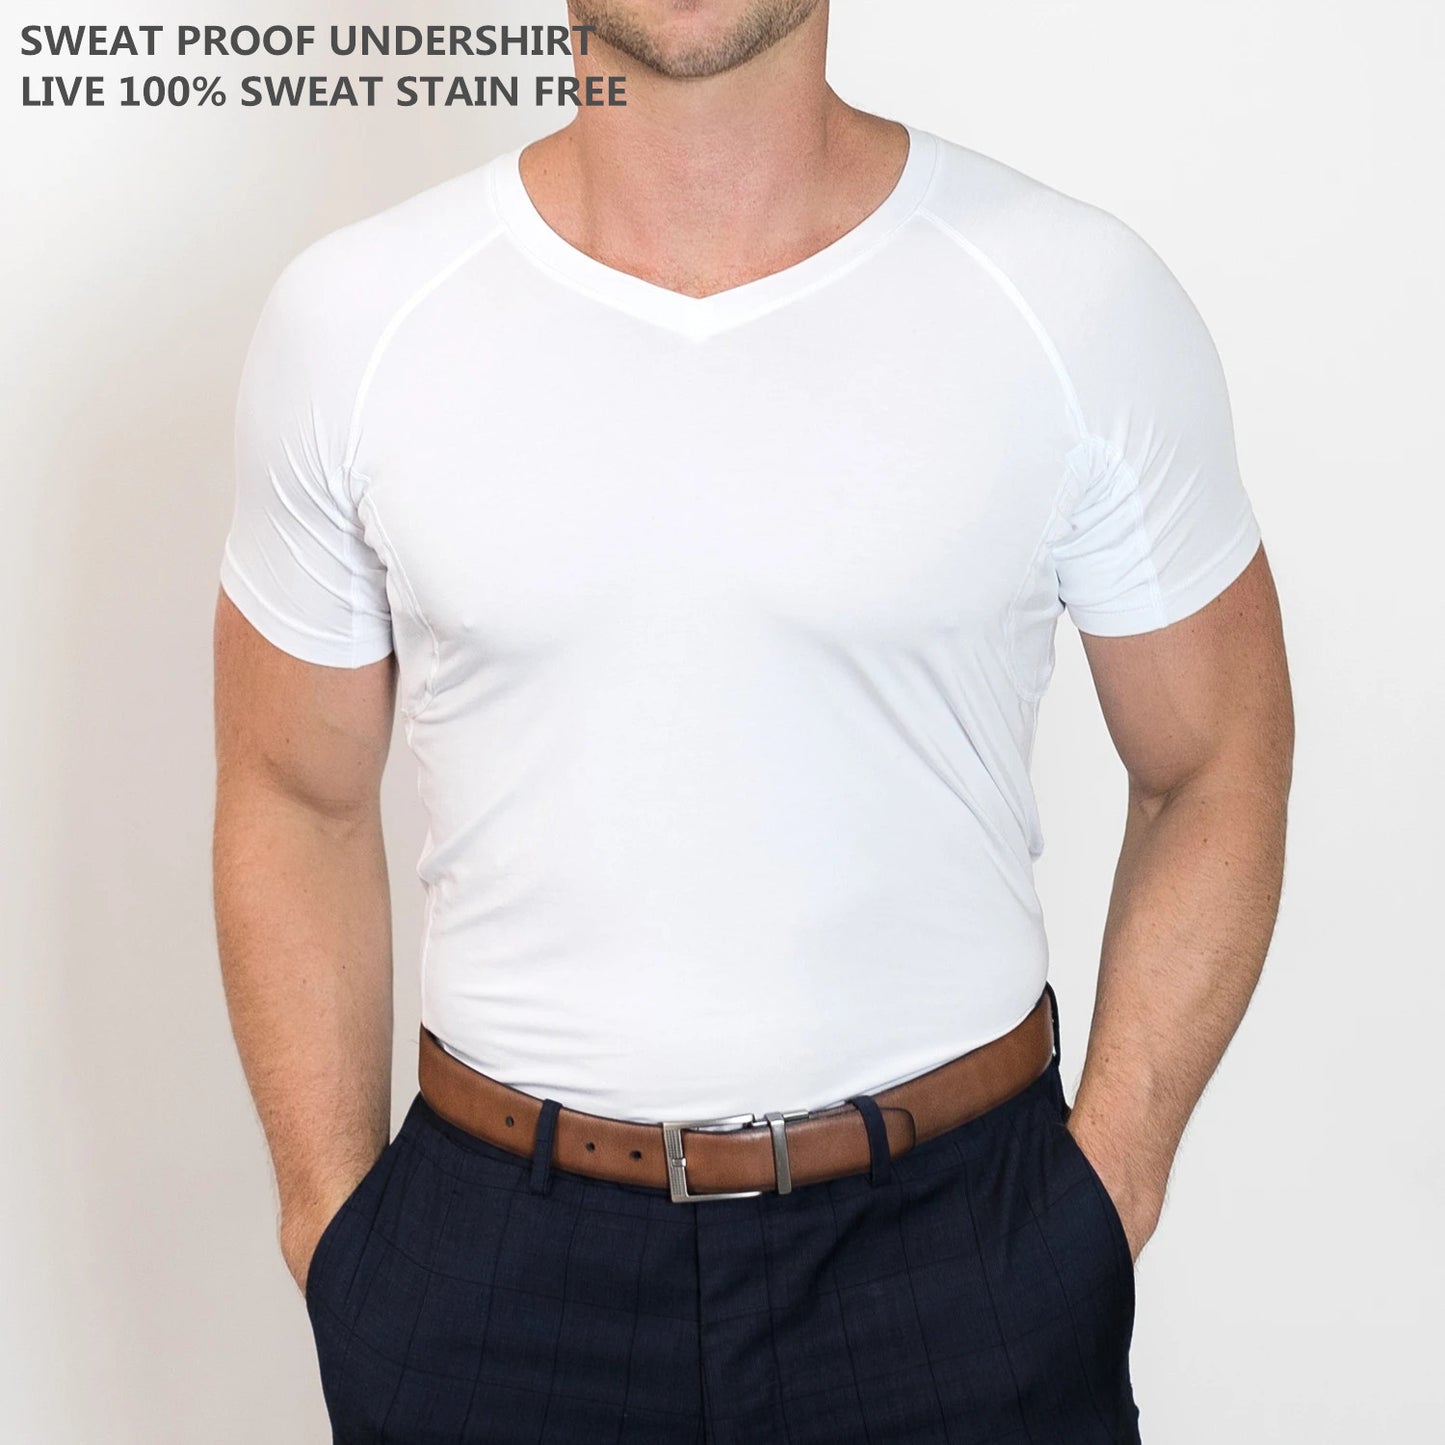 Anti-Odor Modal Basic V-Neck Anti Perspiration Undershirt Sweat Proof t shirt